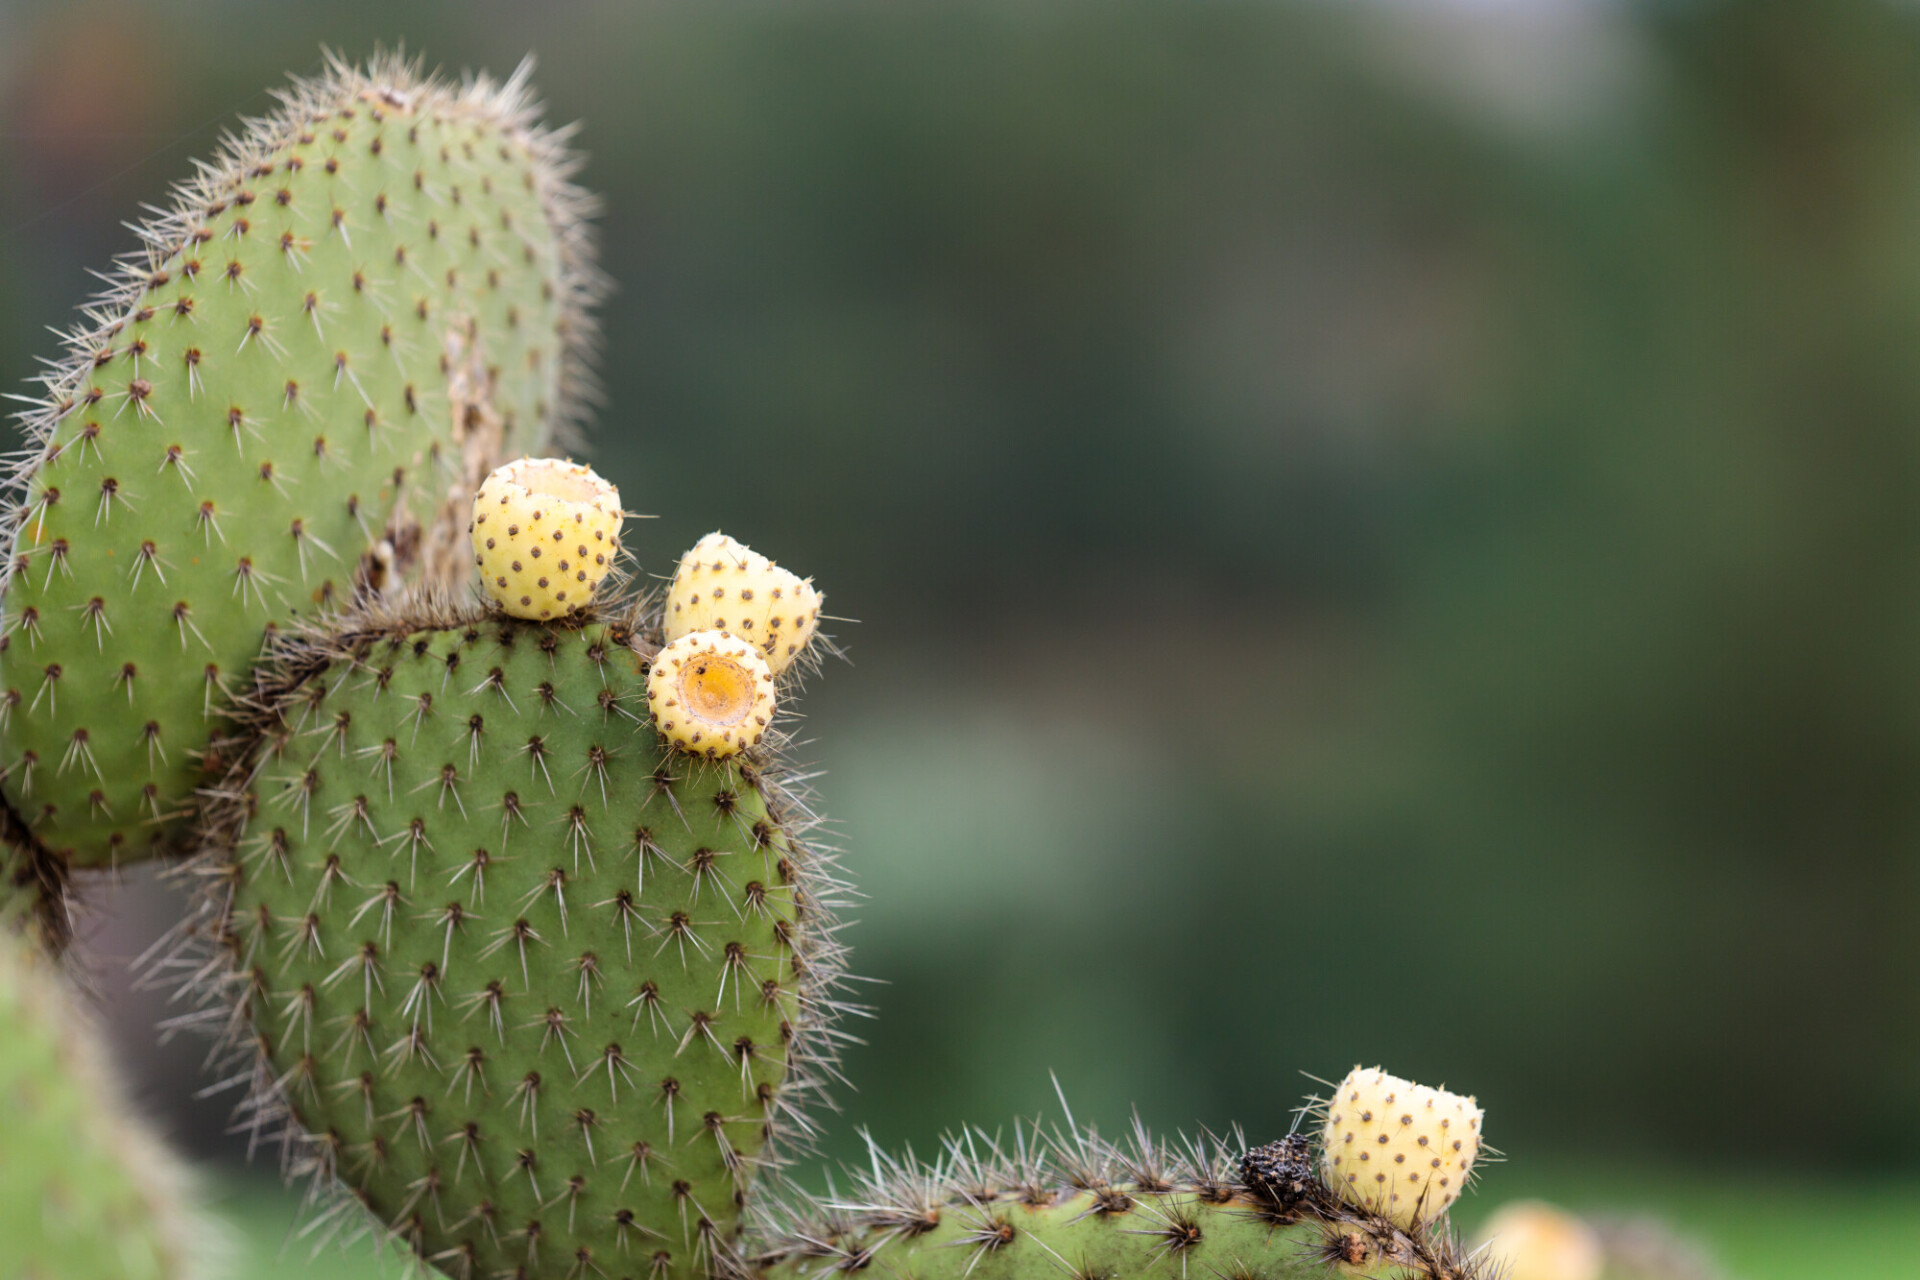 Prickly pear cactus (Opuntia ficus-indica) with sweet orange fruits.